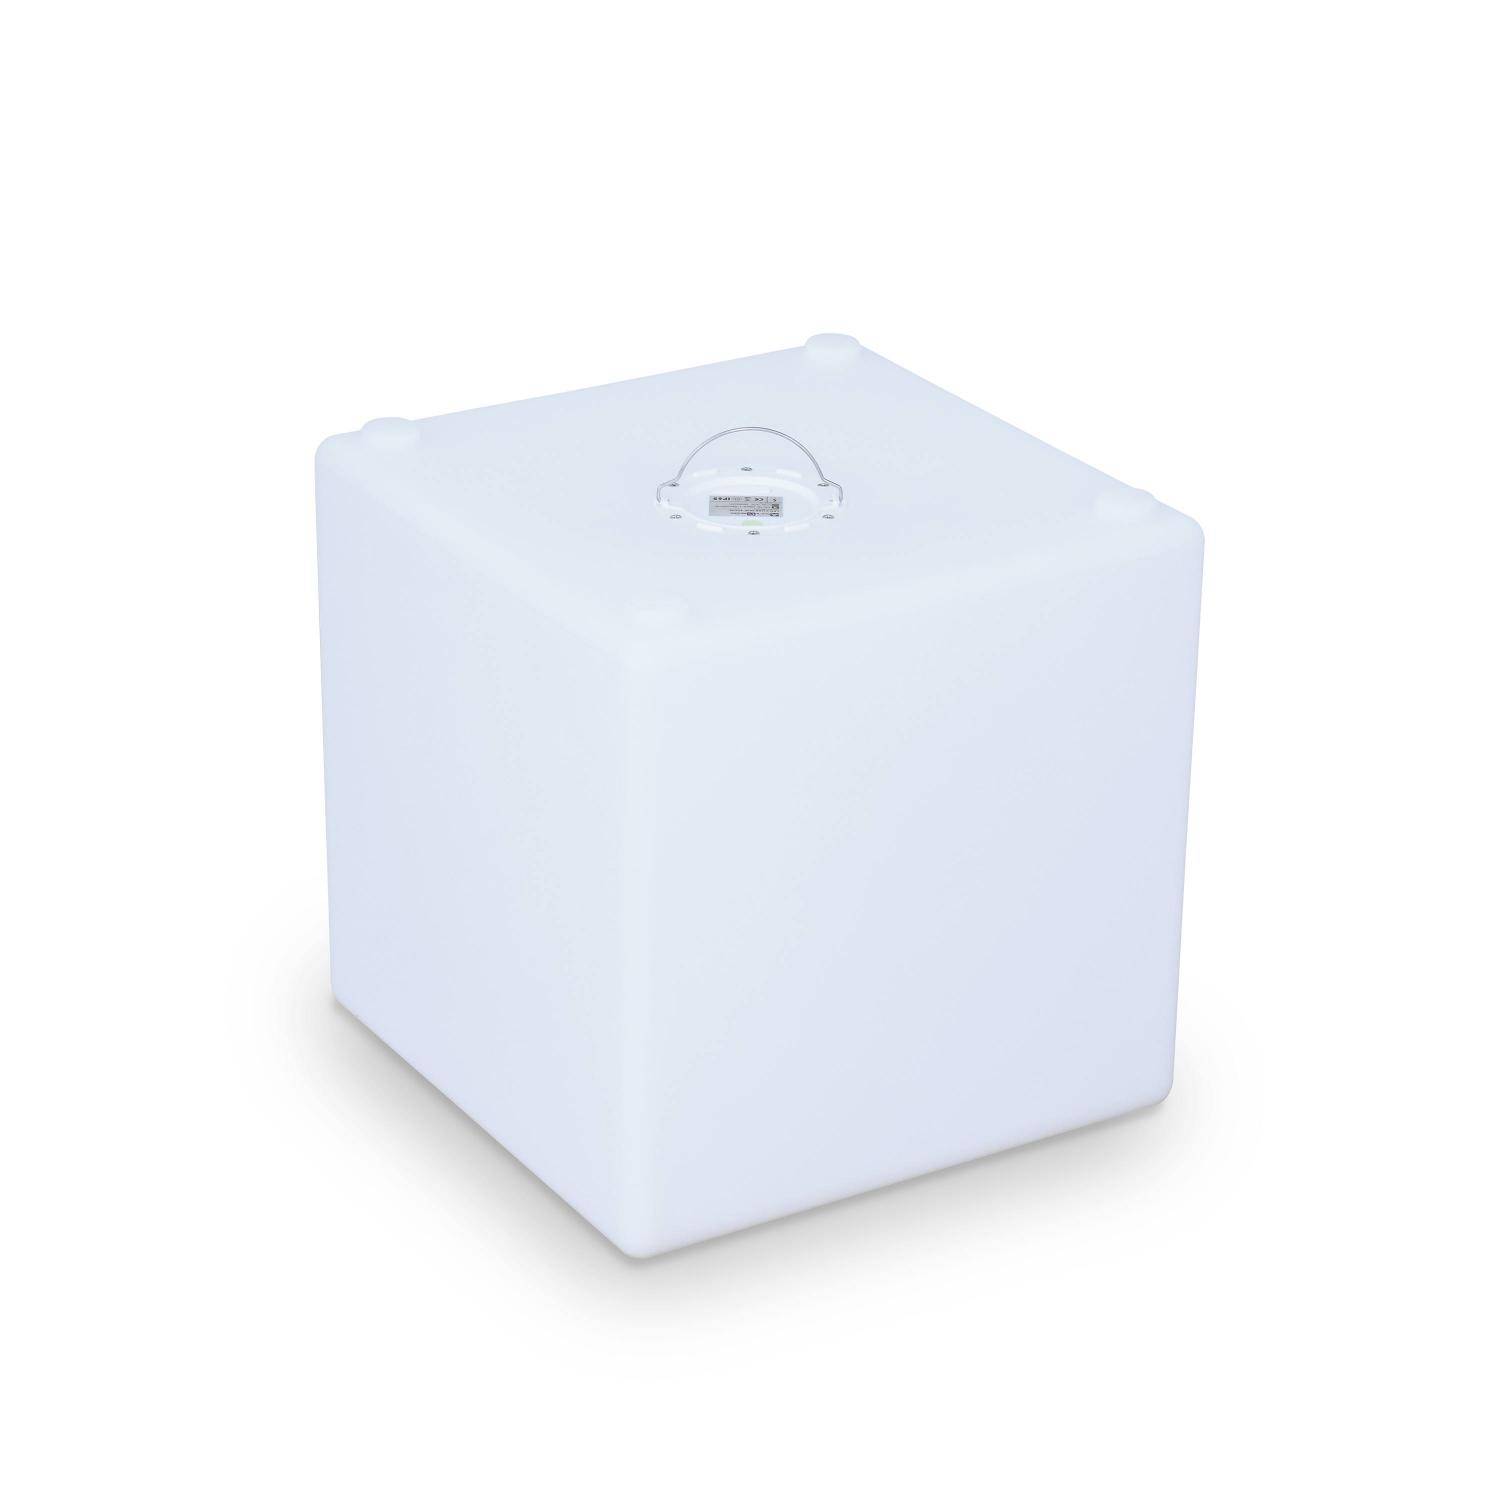 40cm spherical LED lamp – Decorative light cube, warm white, remote control Photo1